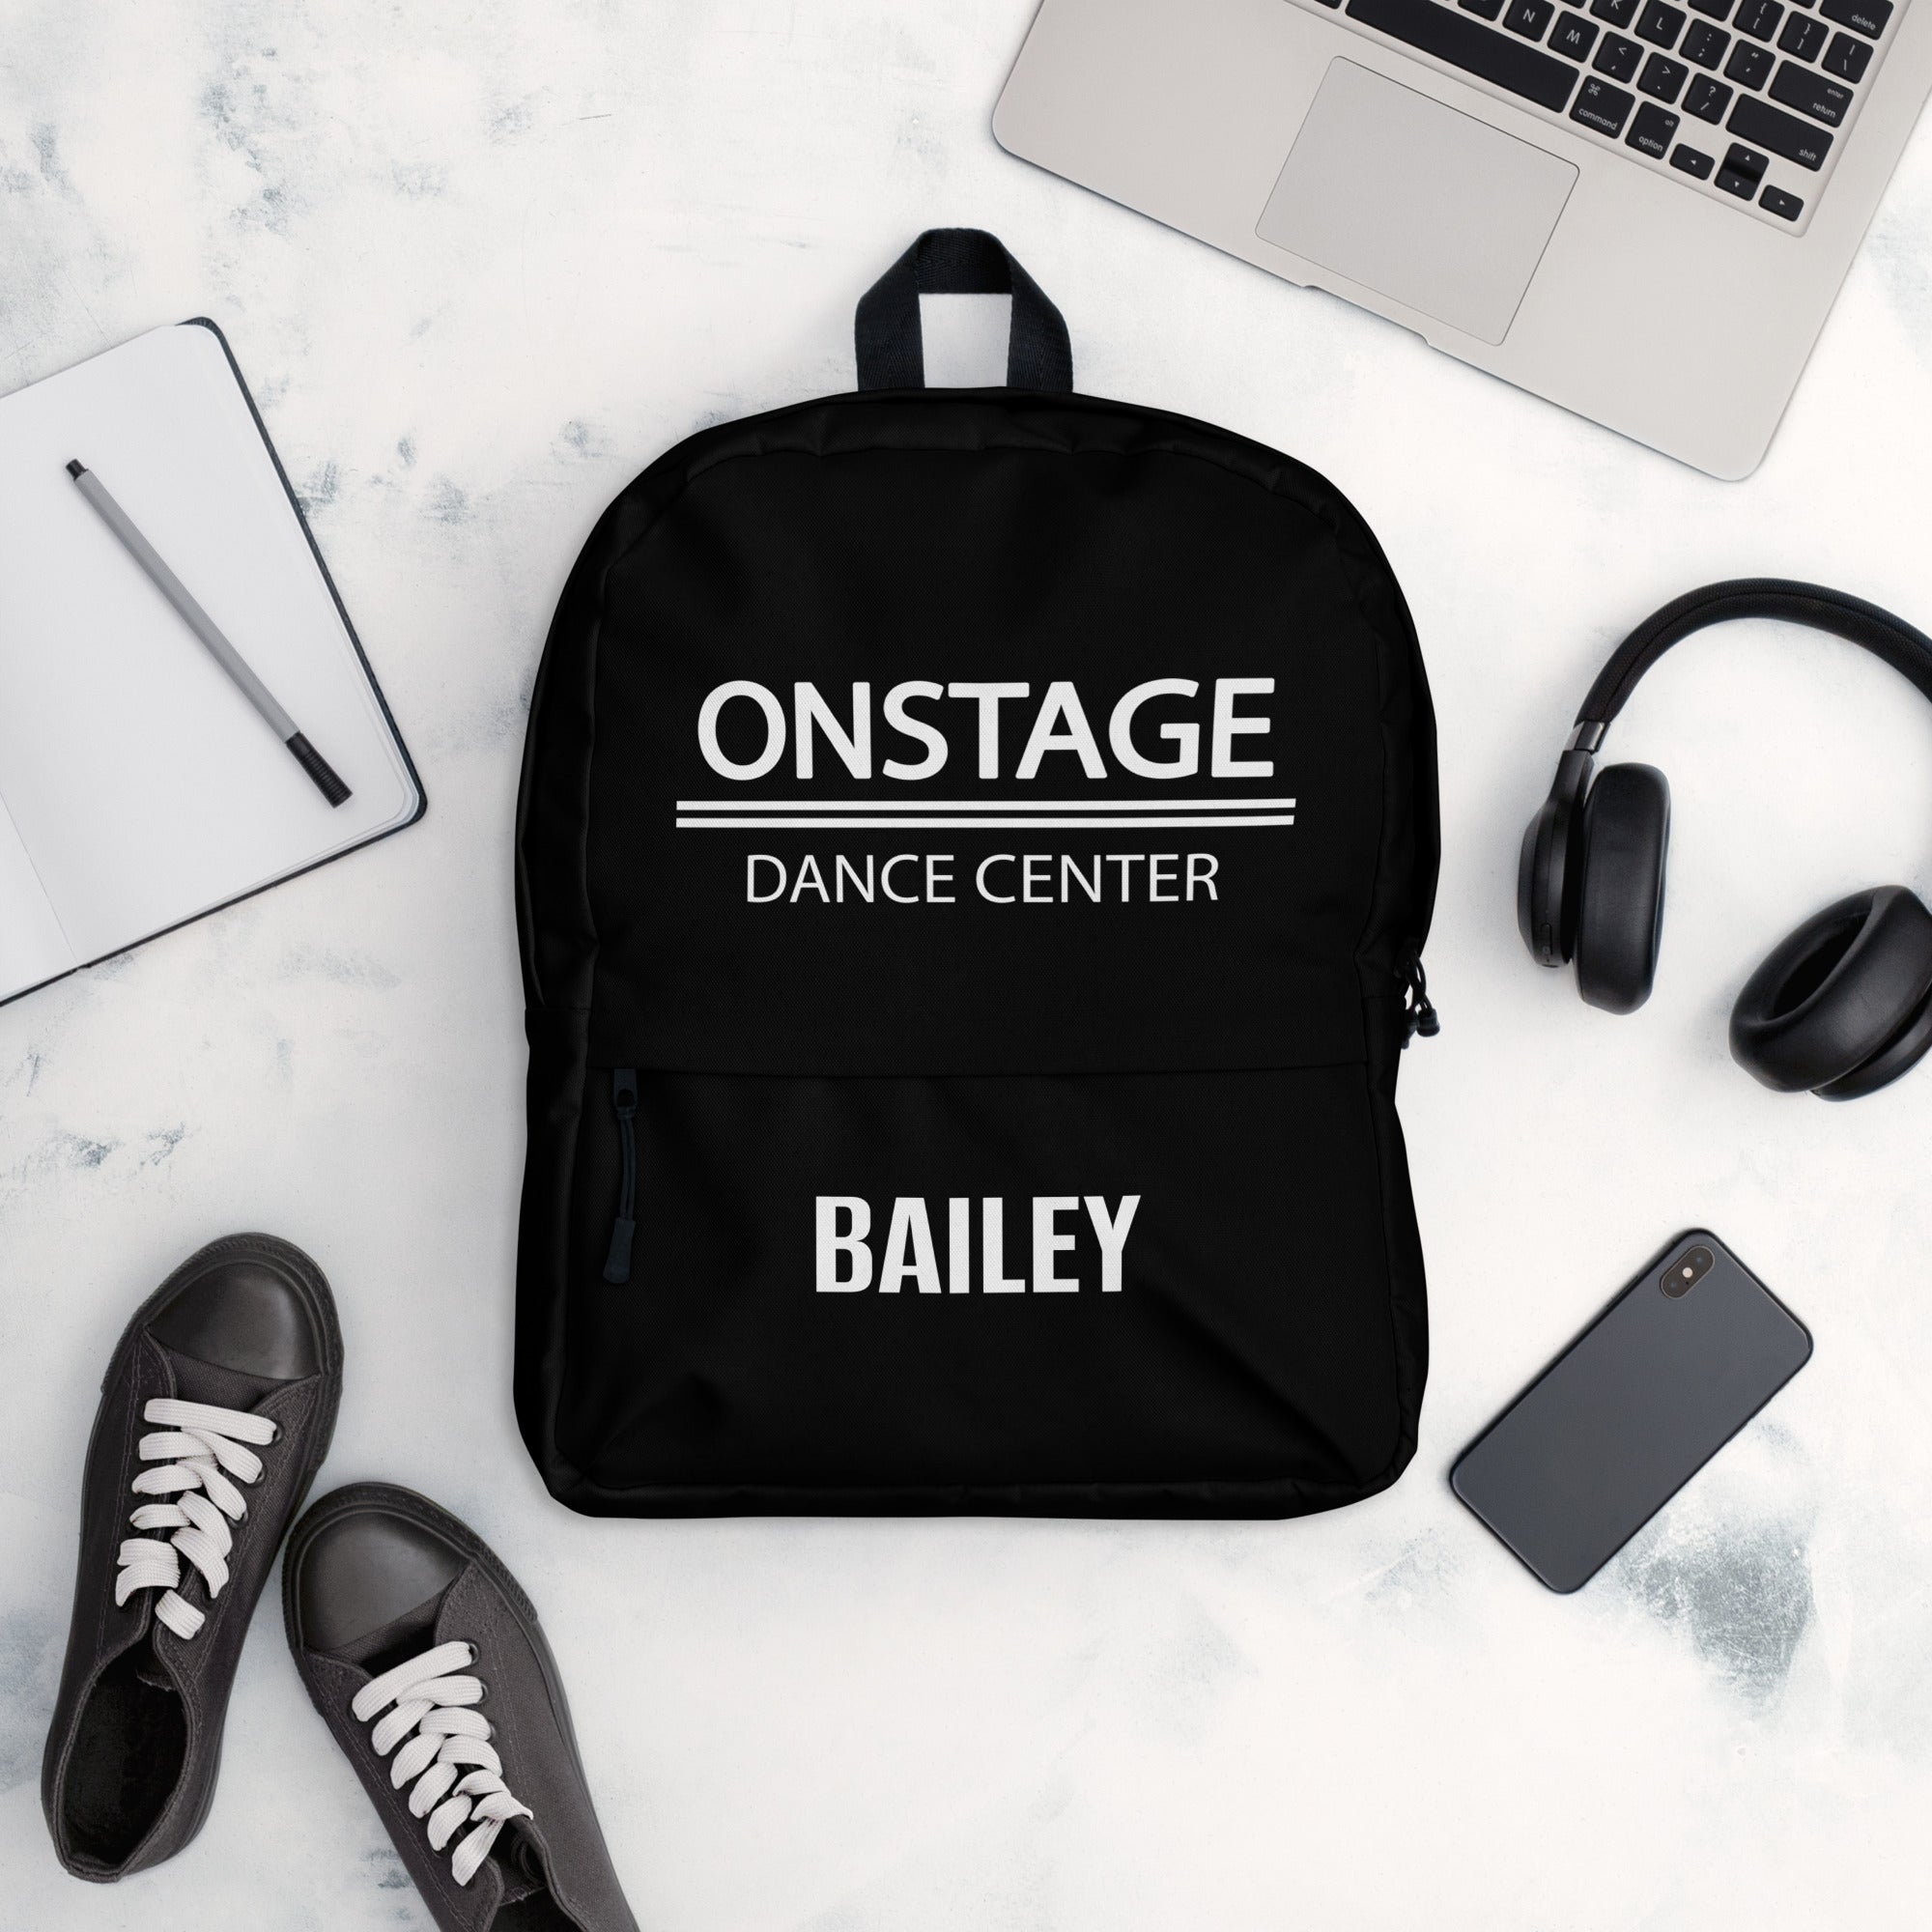 BAILEY ONSTAGE Backpack